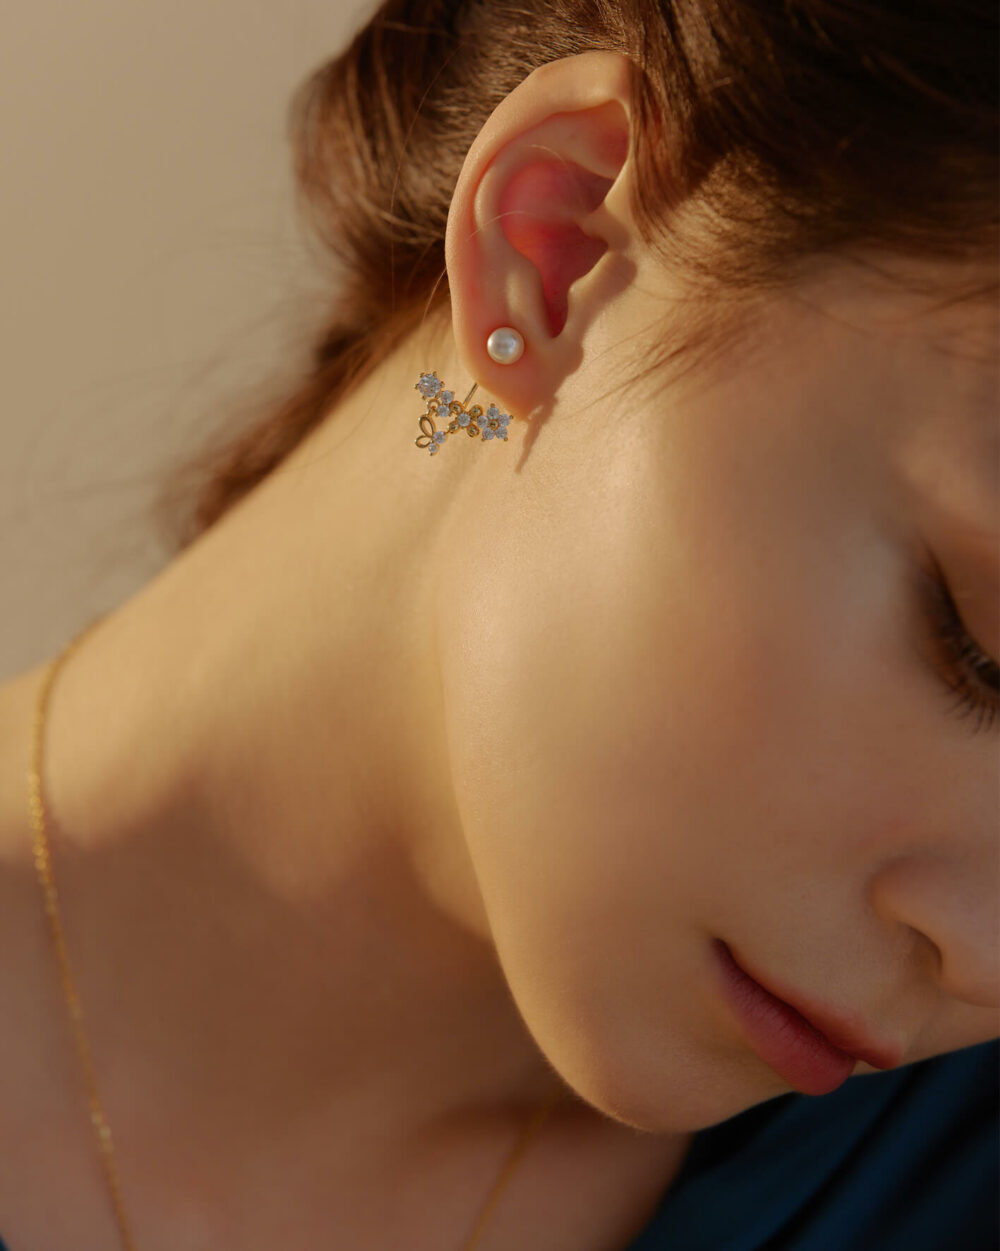 Eco安珂,韓國飾品,韓國耳環,韓國耳骨夾,韓國耳扣,耳夾式耳環,磁鐵耳環,磁吸式耳環,無耳洞耳環